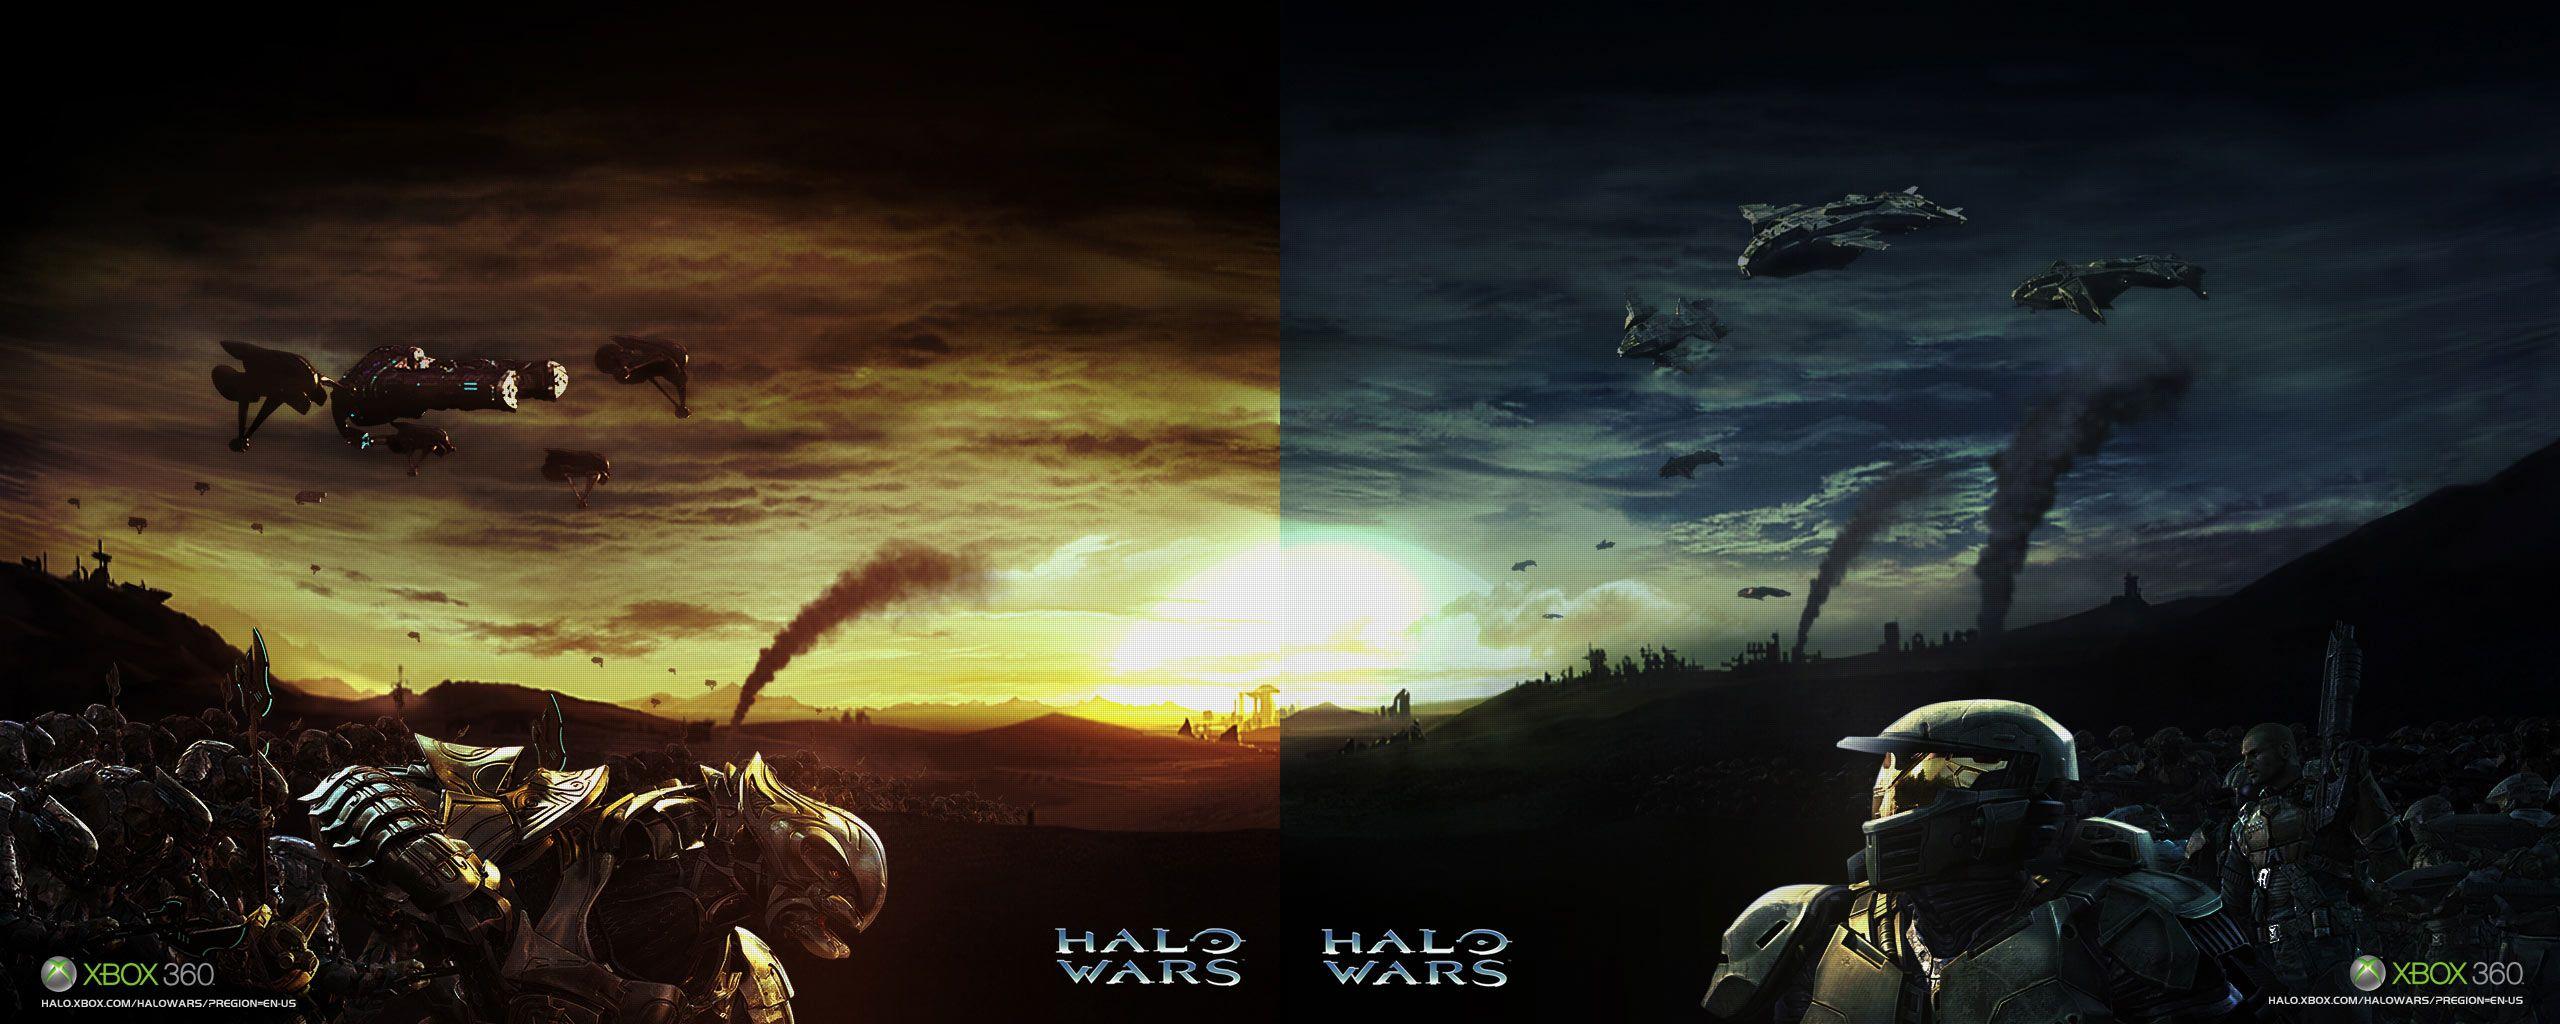 Re: Halo Wars Wallpaper